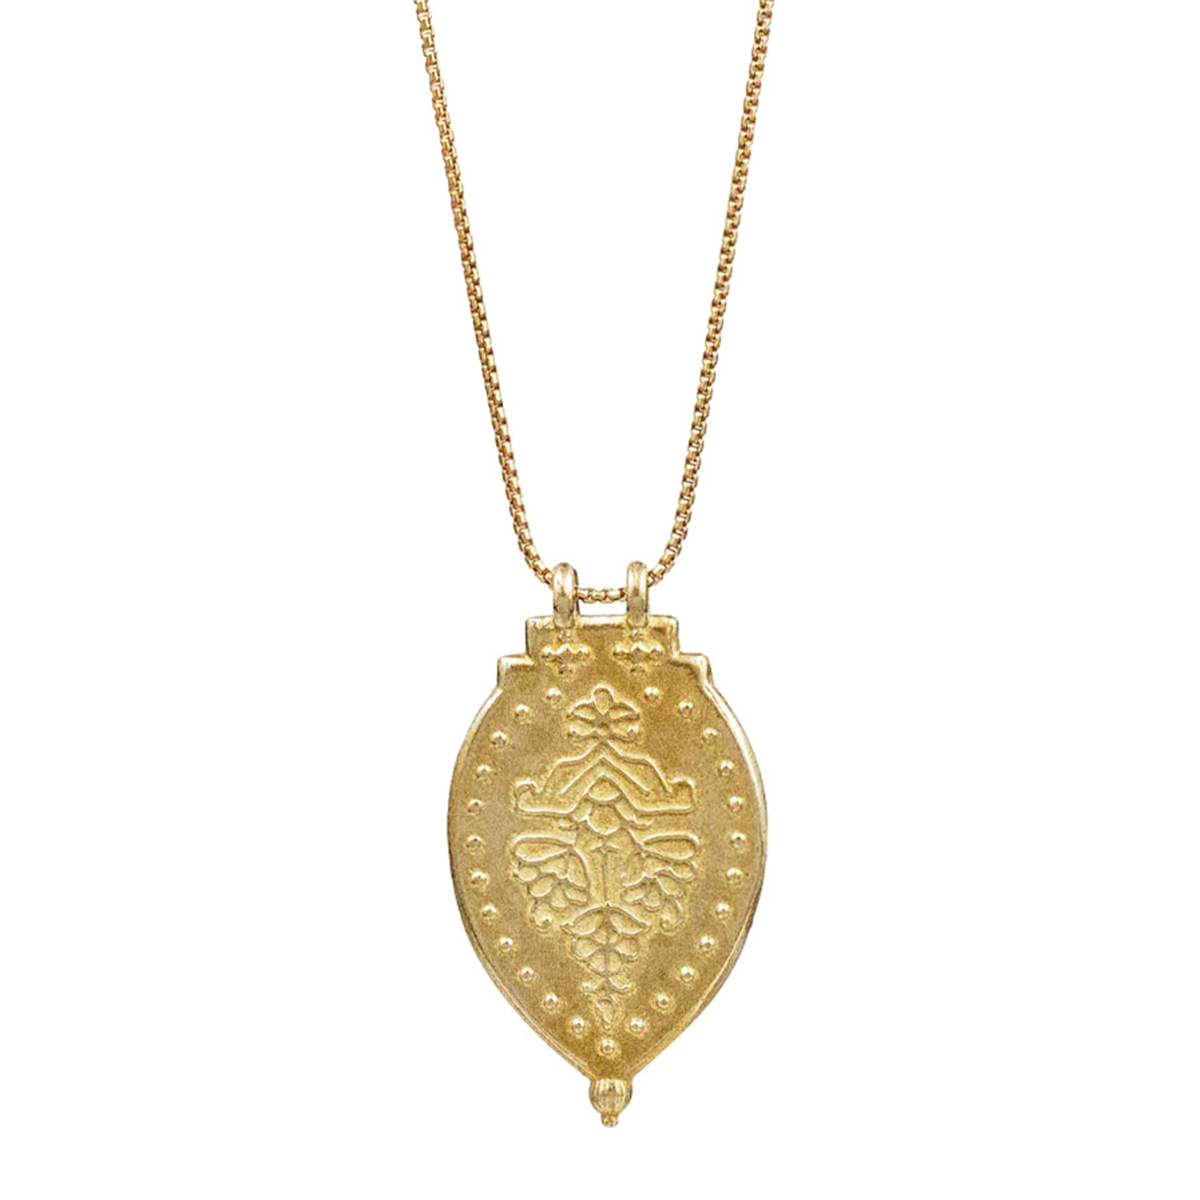 Buy Online Heart Pendant Necklace | Narcissa Jewelry